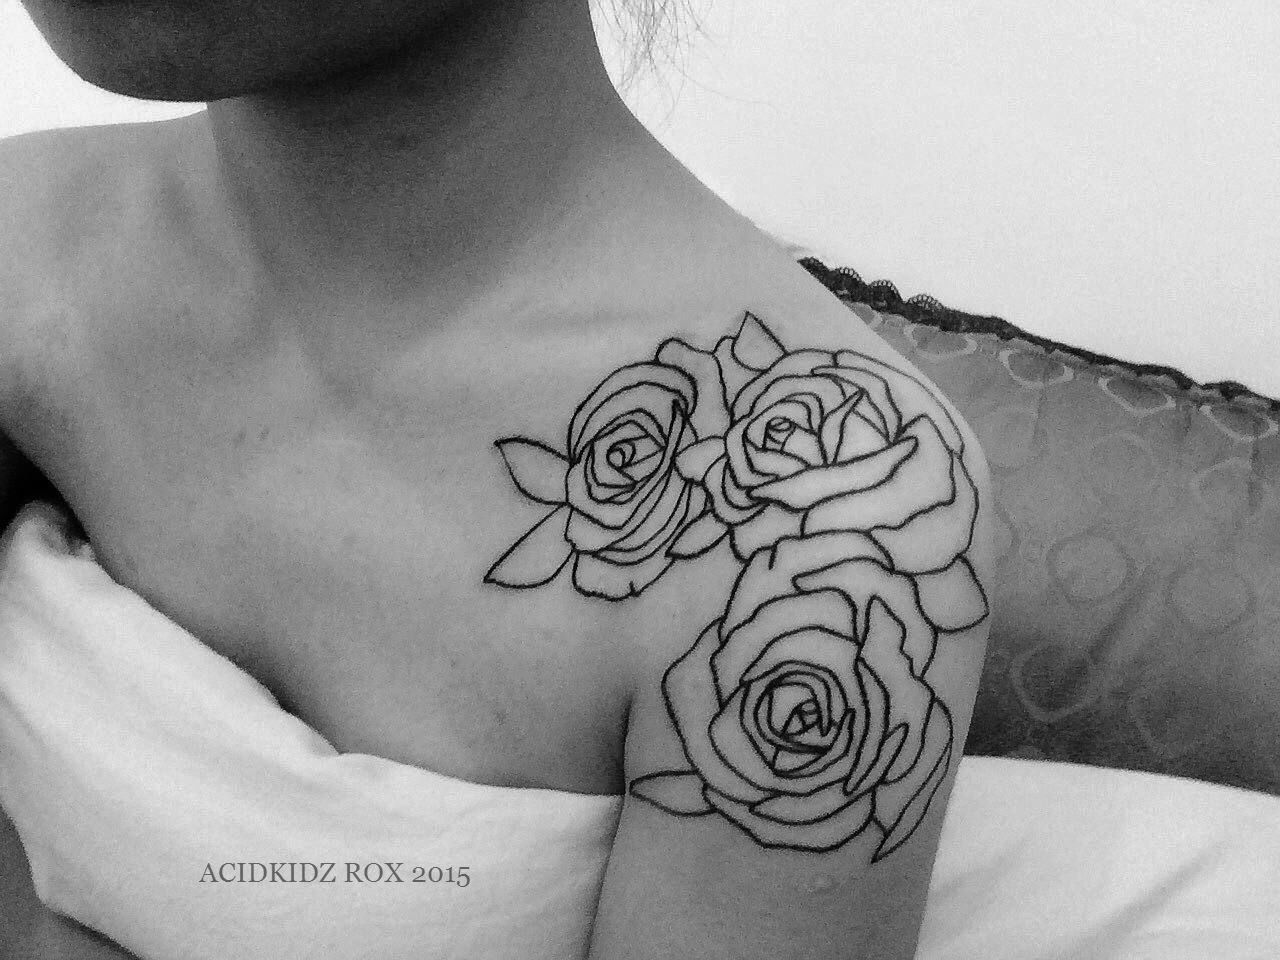 Taiwan, Kaohsiung | roxiehart666 | acidkidz tattoo | shoulder | rose | outline tattoo